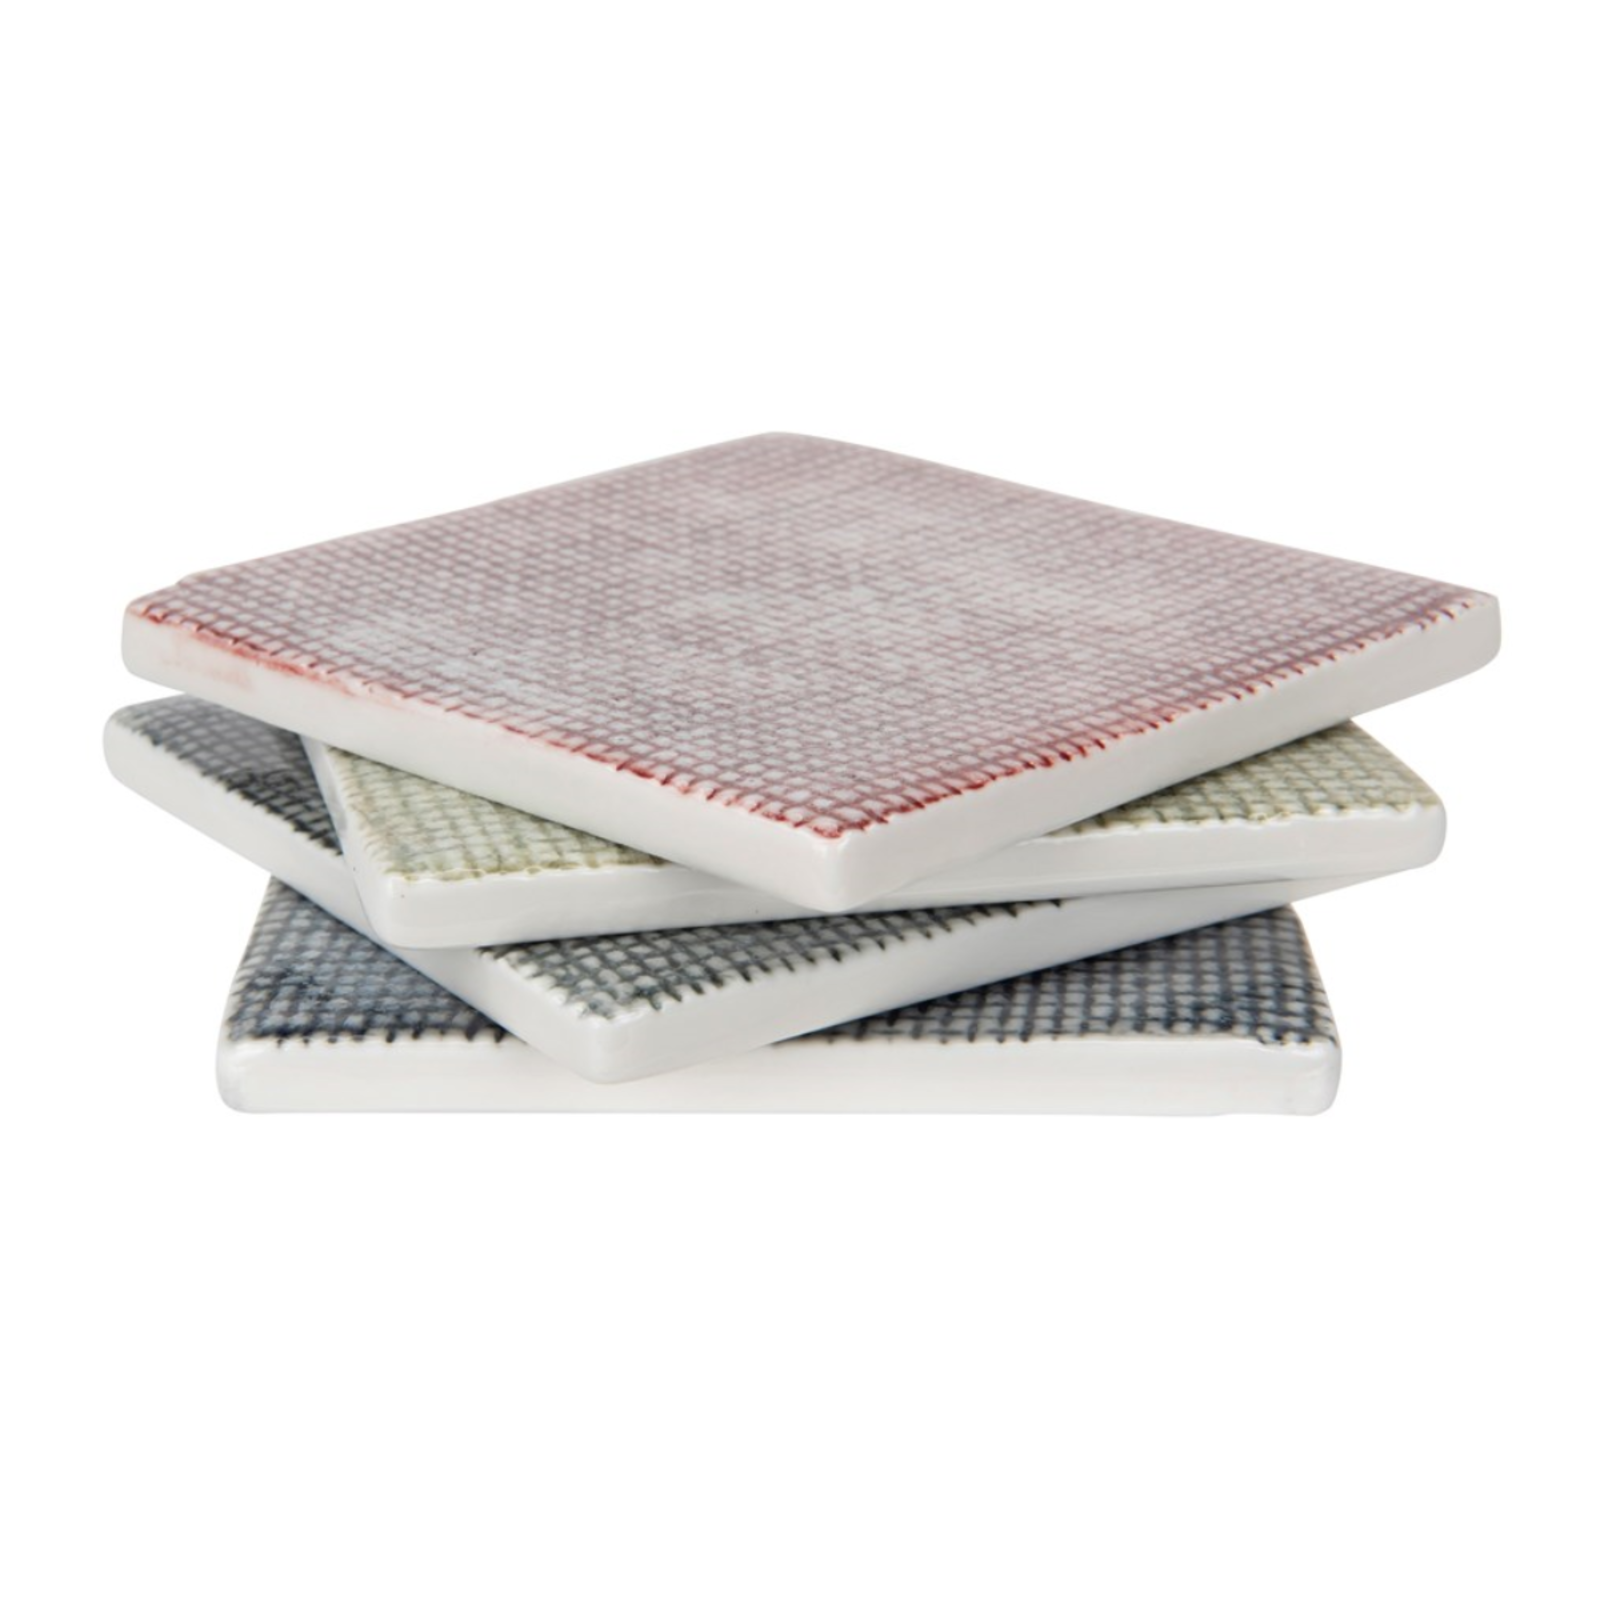 Creative Co-Op 4" Square Ceramic Coasters w/ Embossed Cloth Design (4)   DF1453 loading=